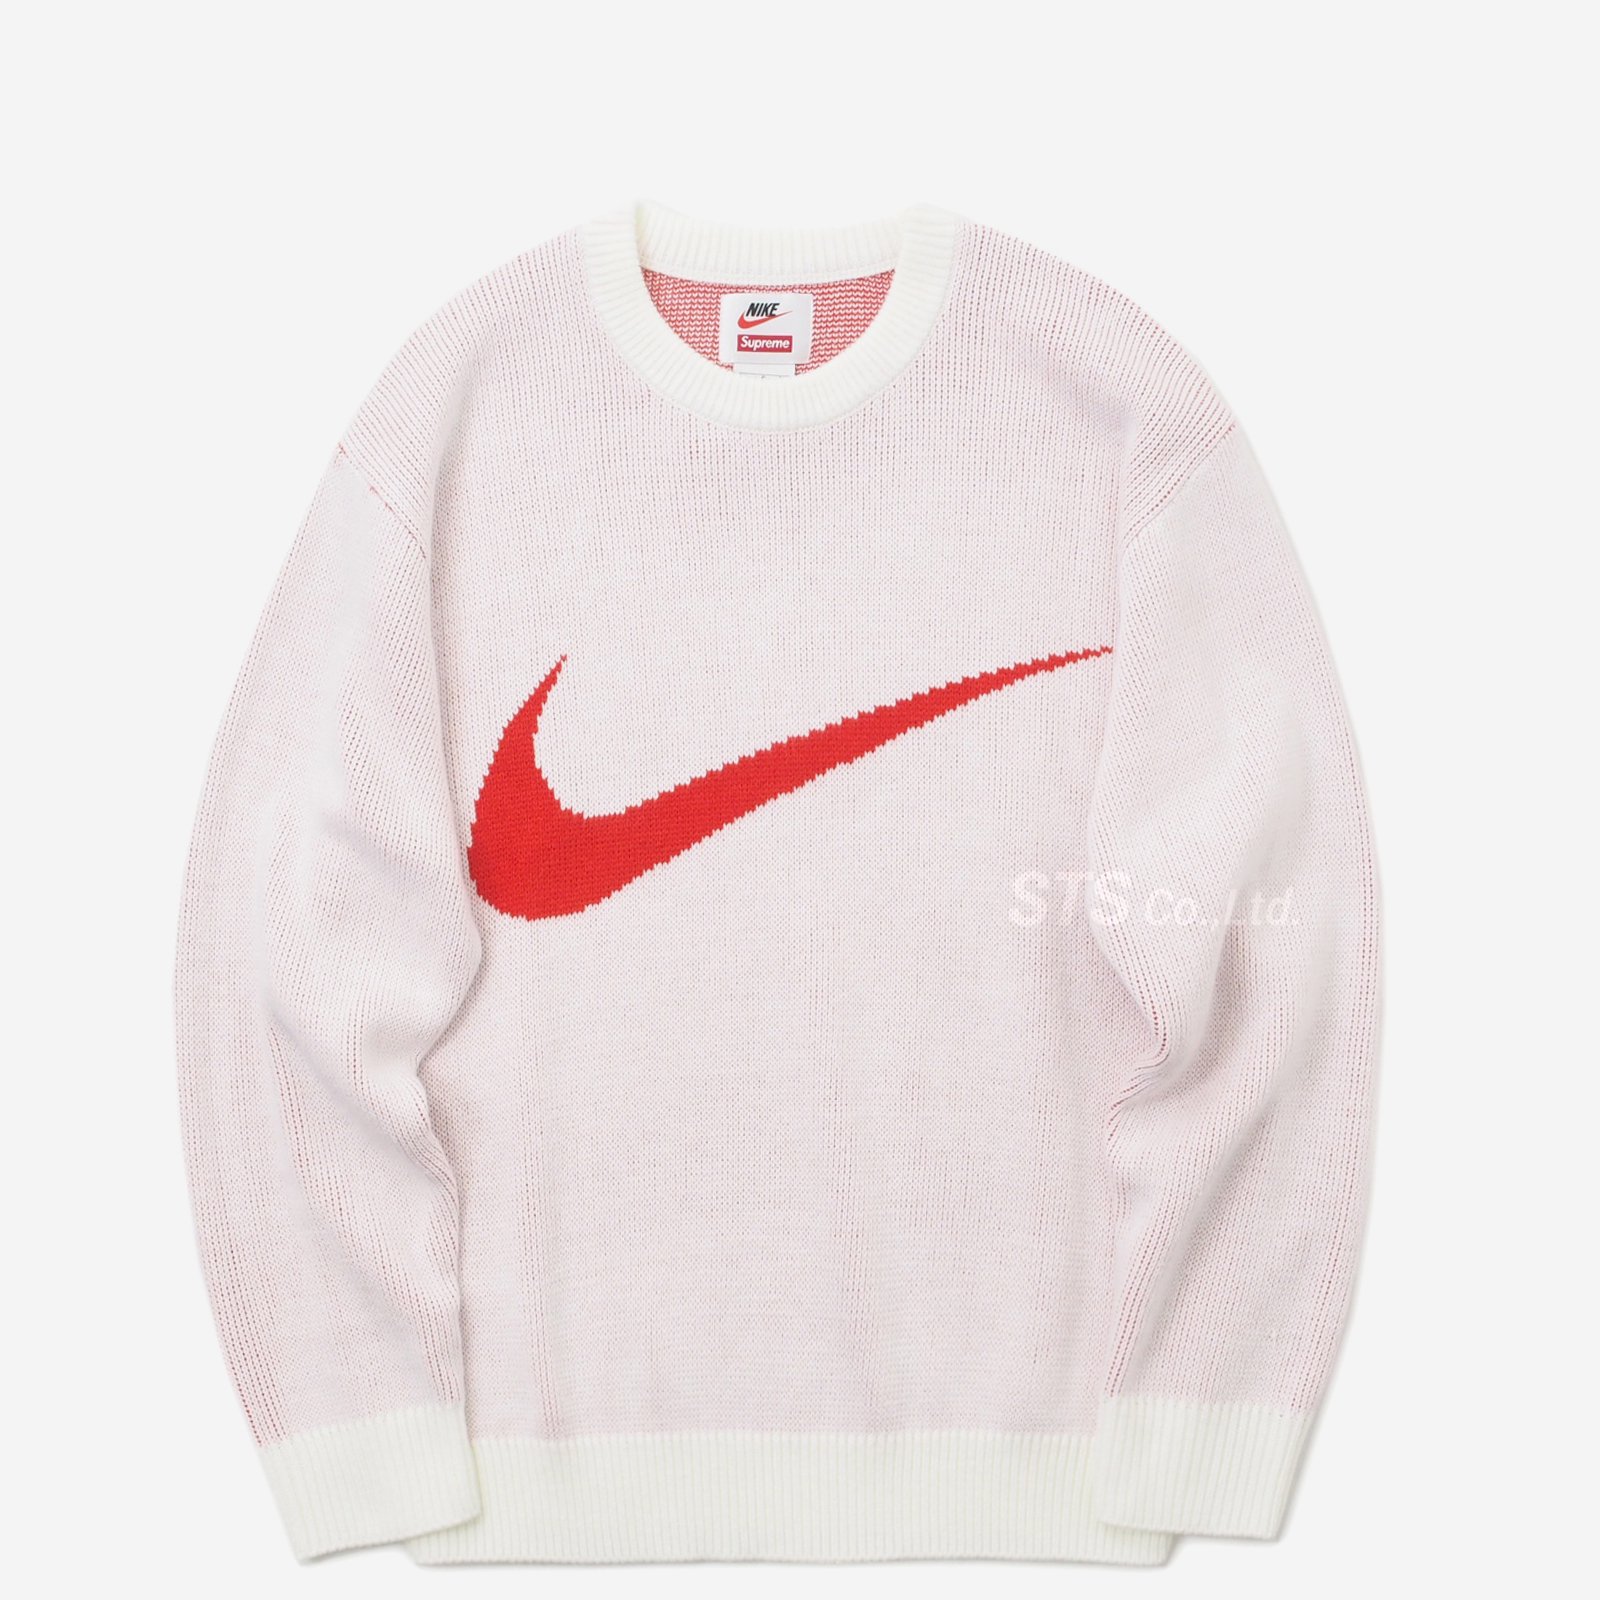 Supreme/Nike Swoosh Sweater - UG.SHAFT